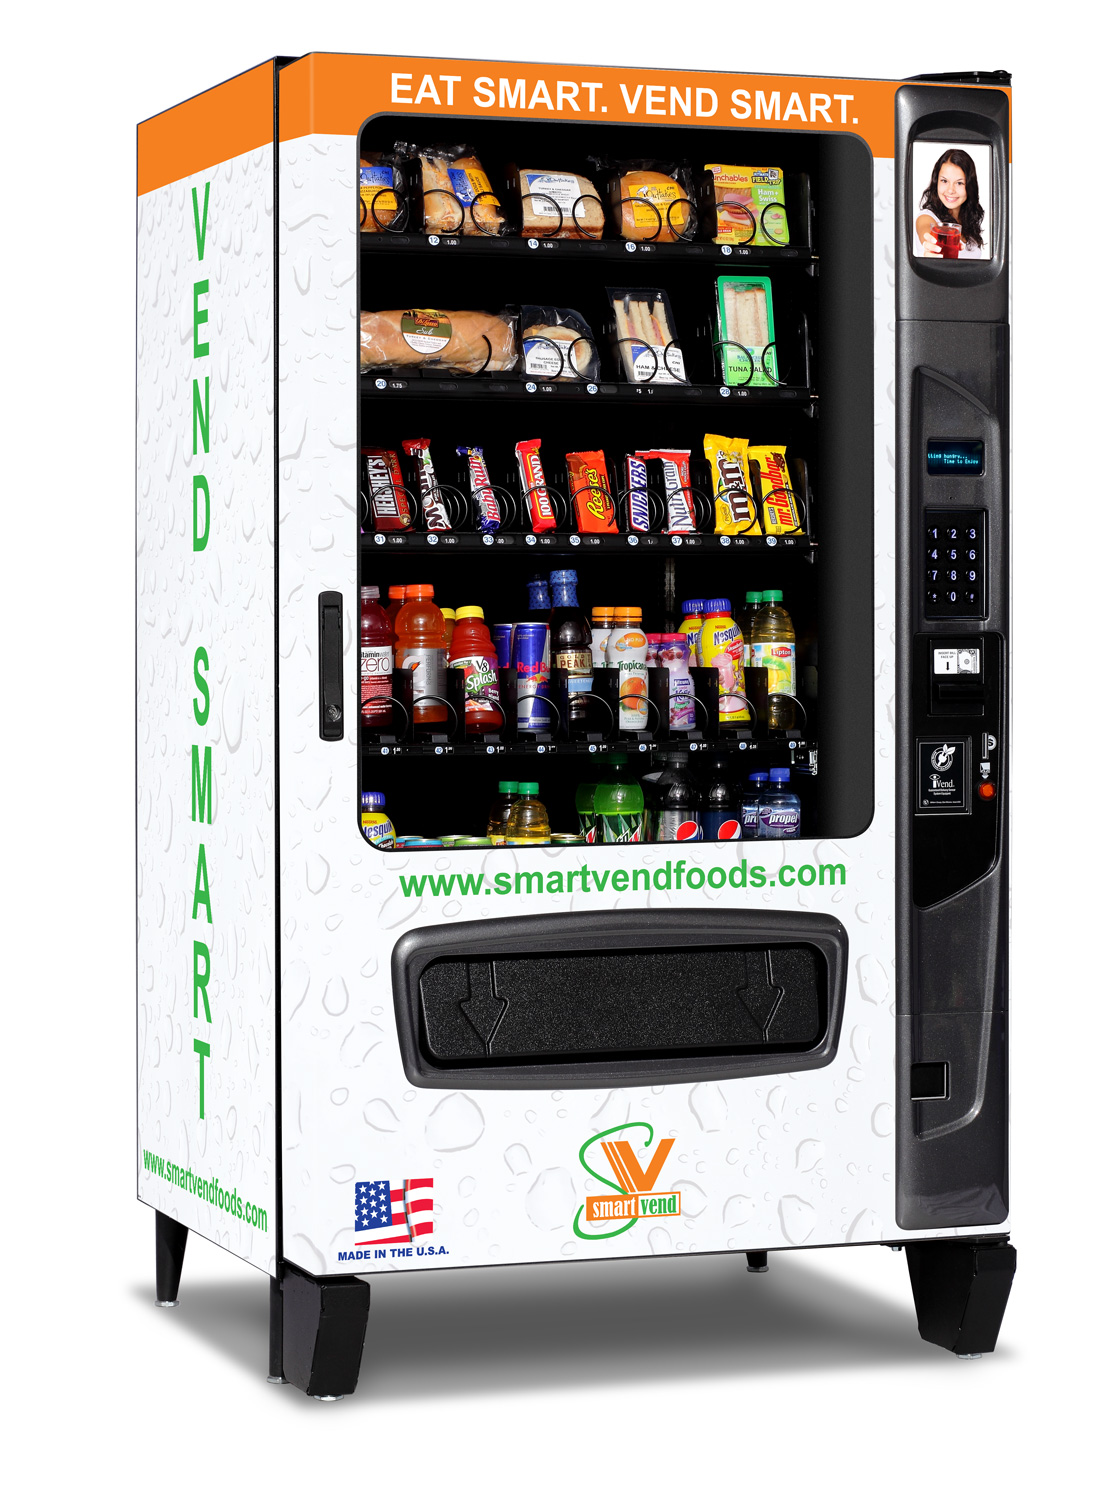 Why Choose Smartvend Quality Vending Services